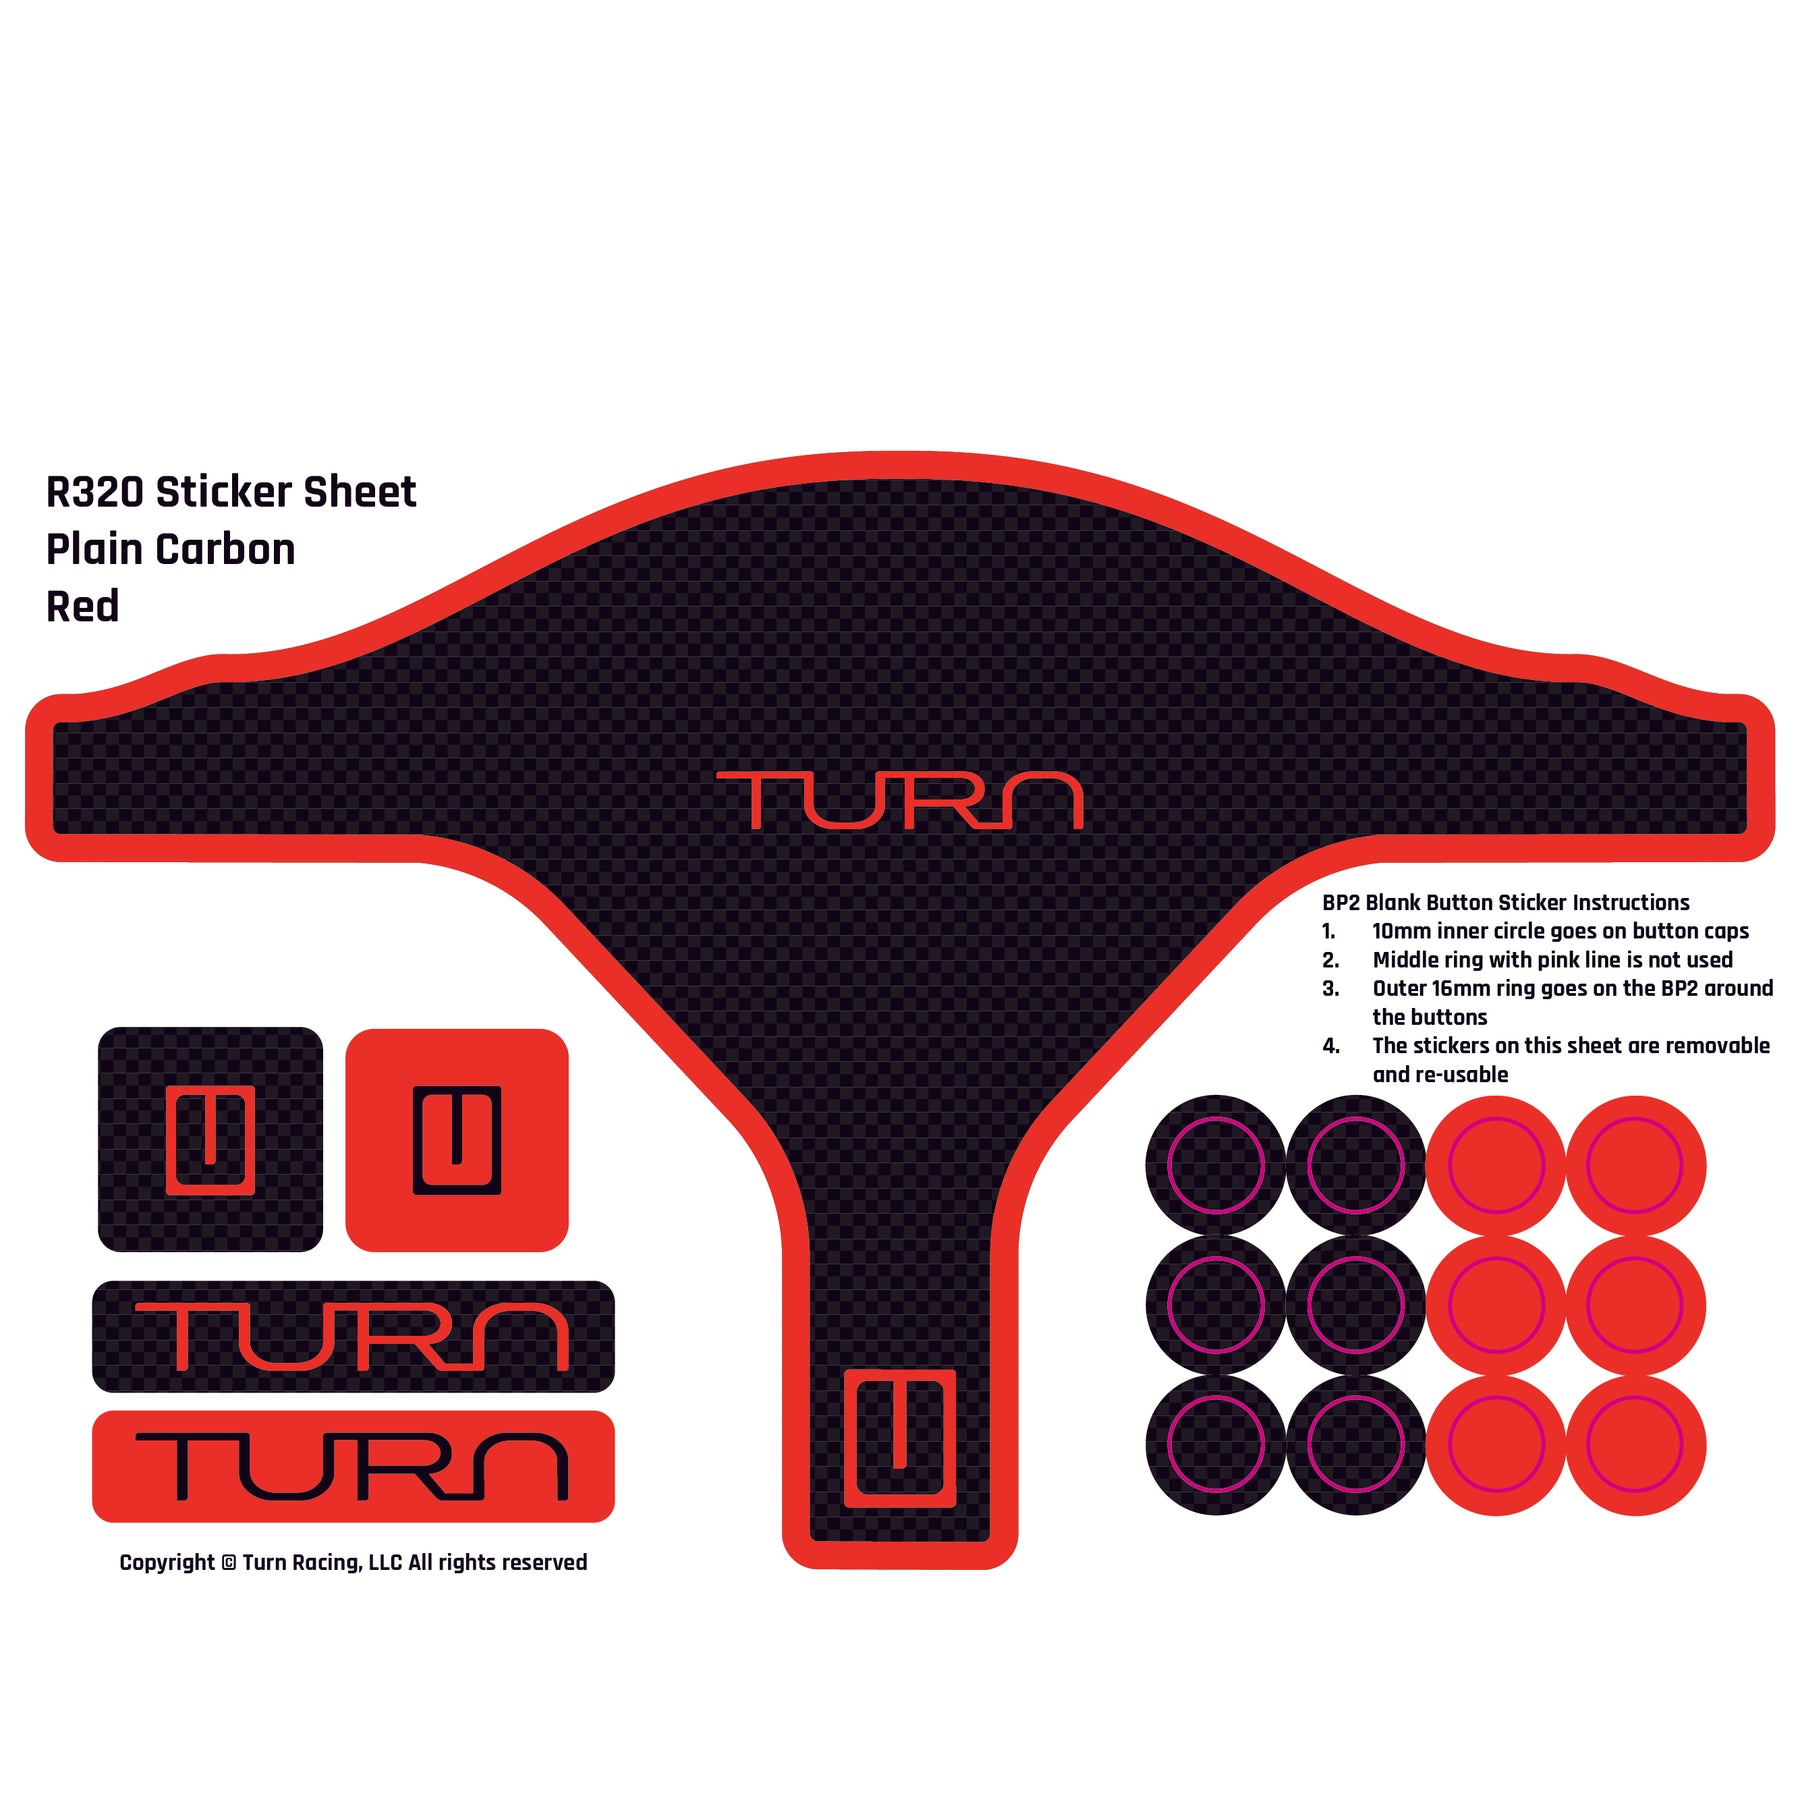 Turn R320S ticker Sheet- Plain Carbon Red